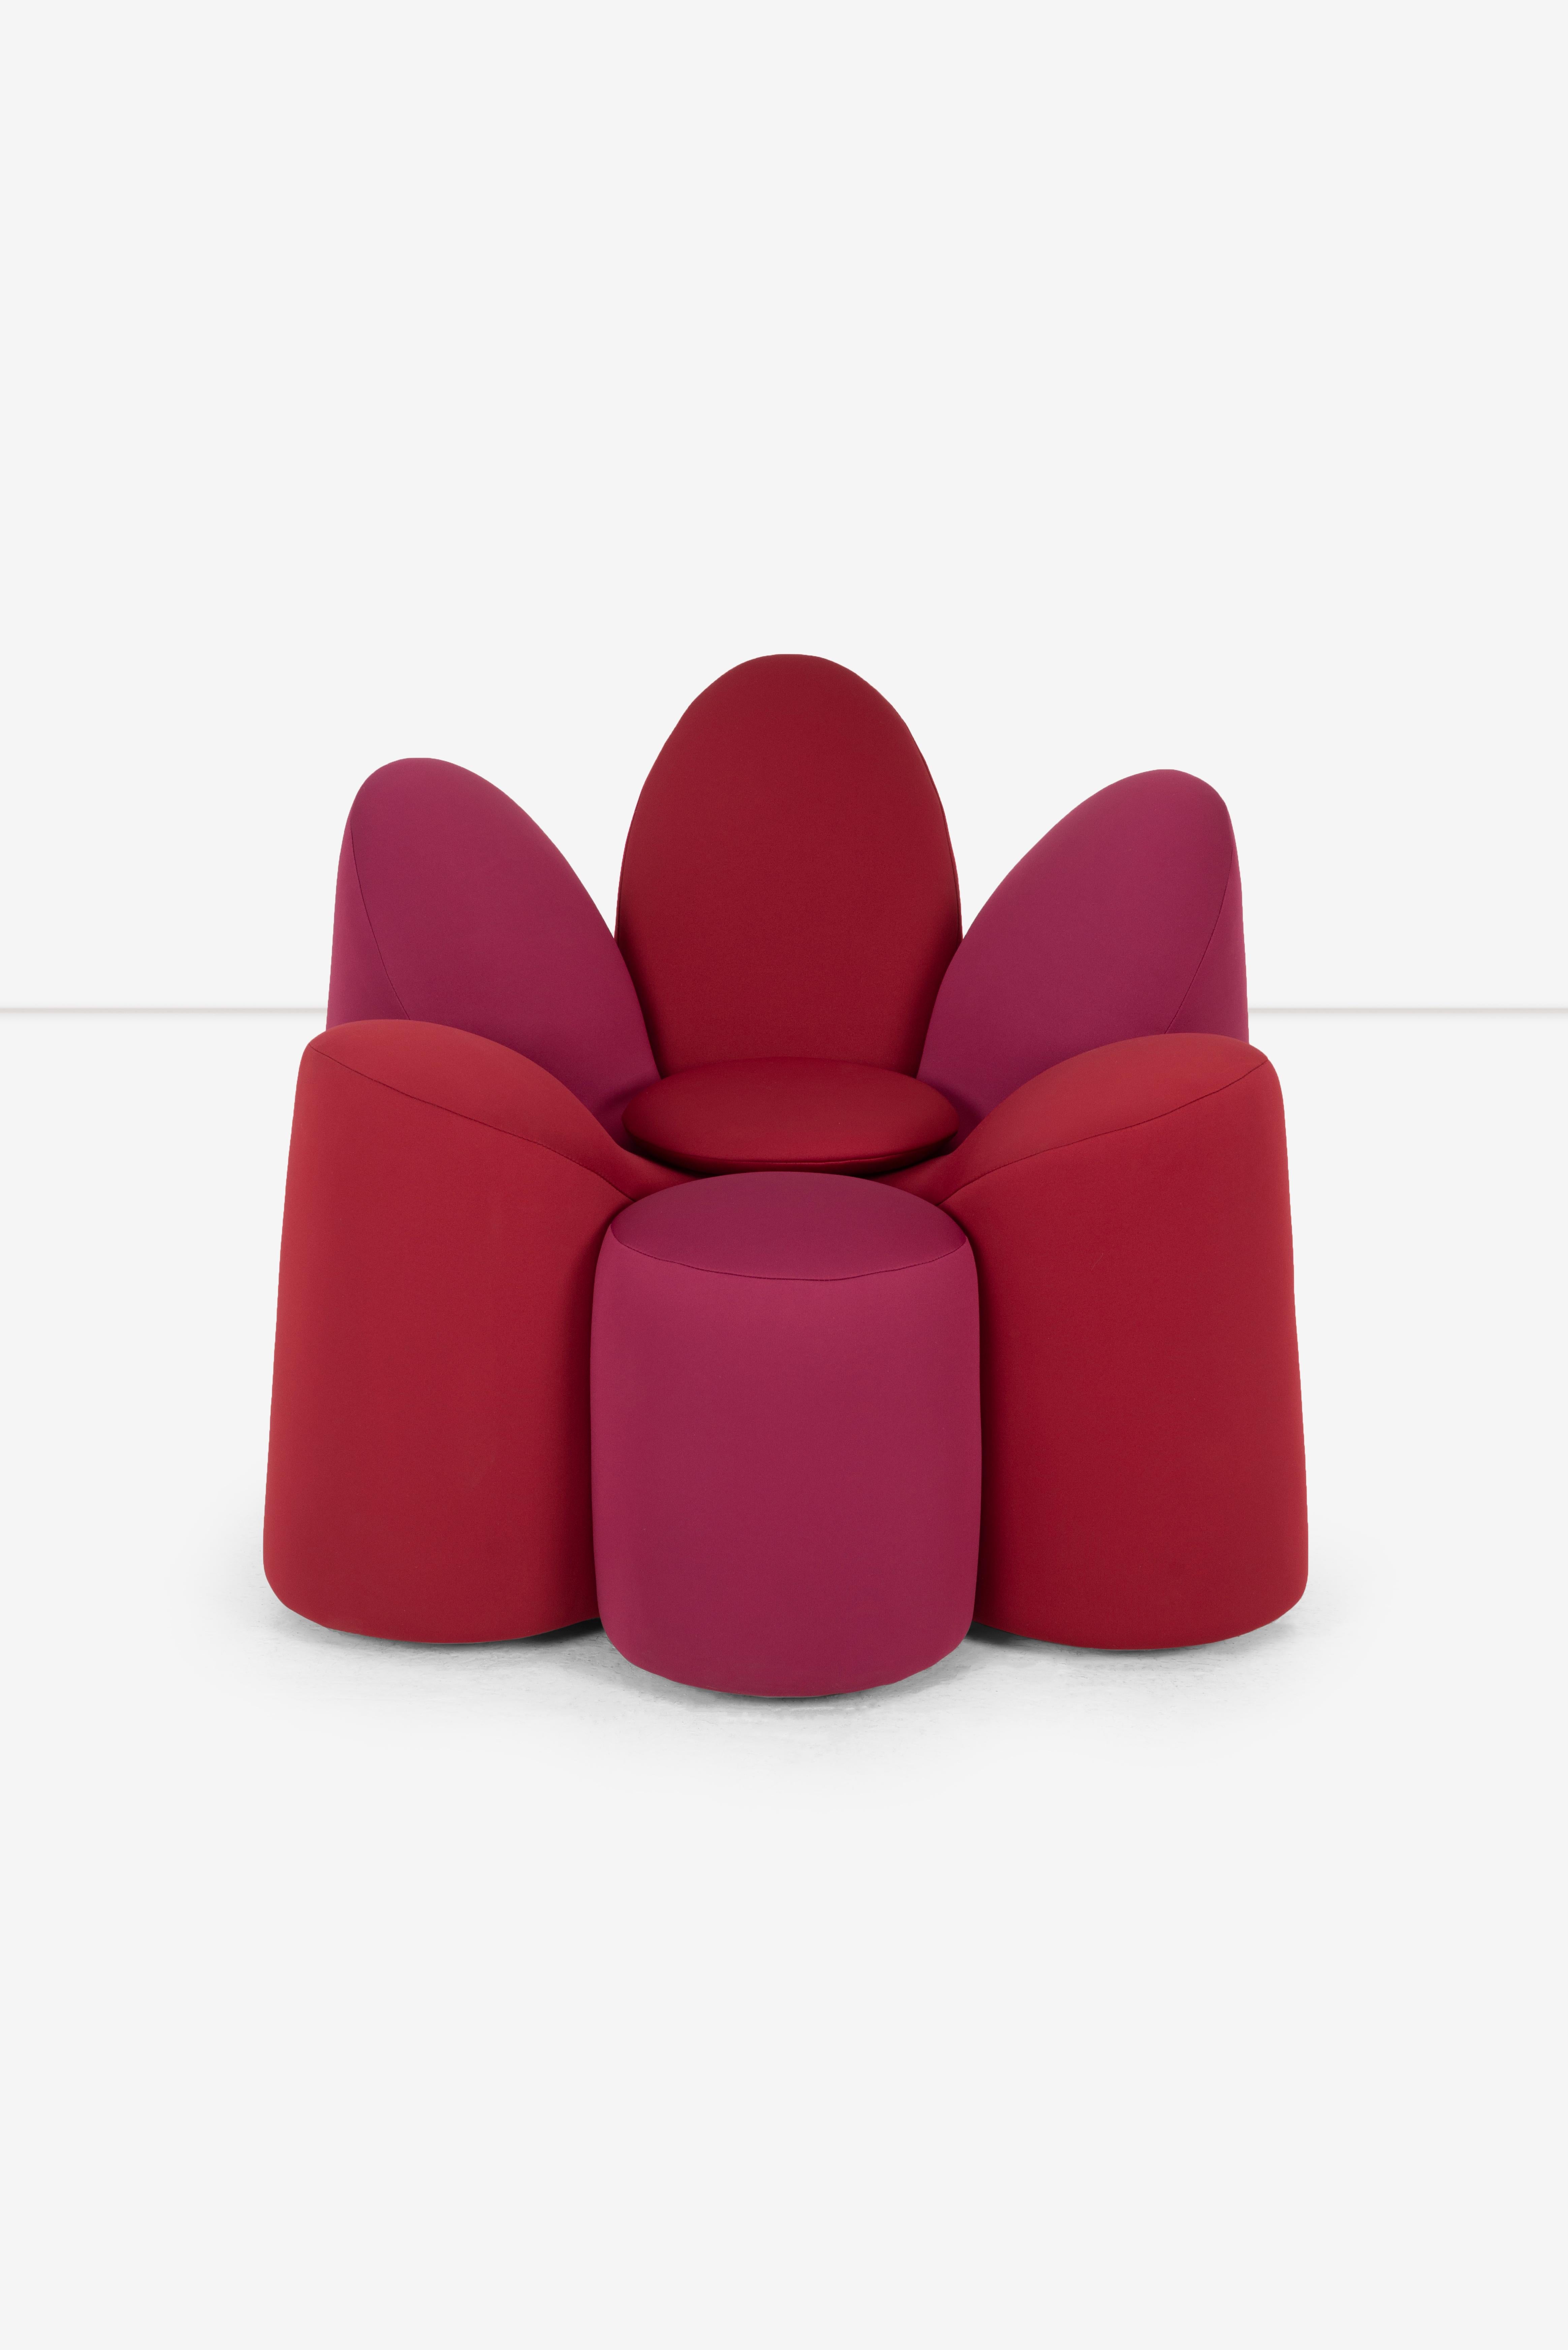 roche bobois mayflower chair